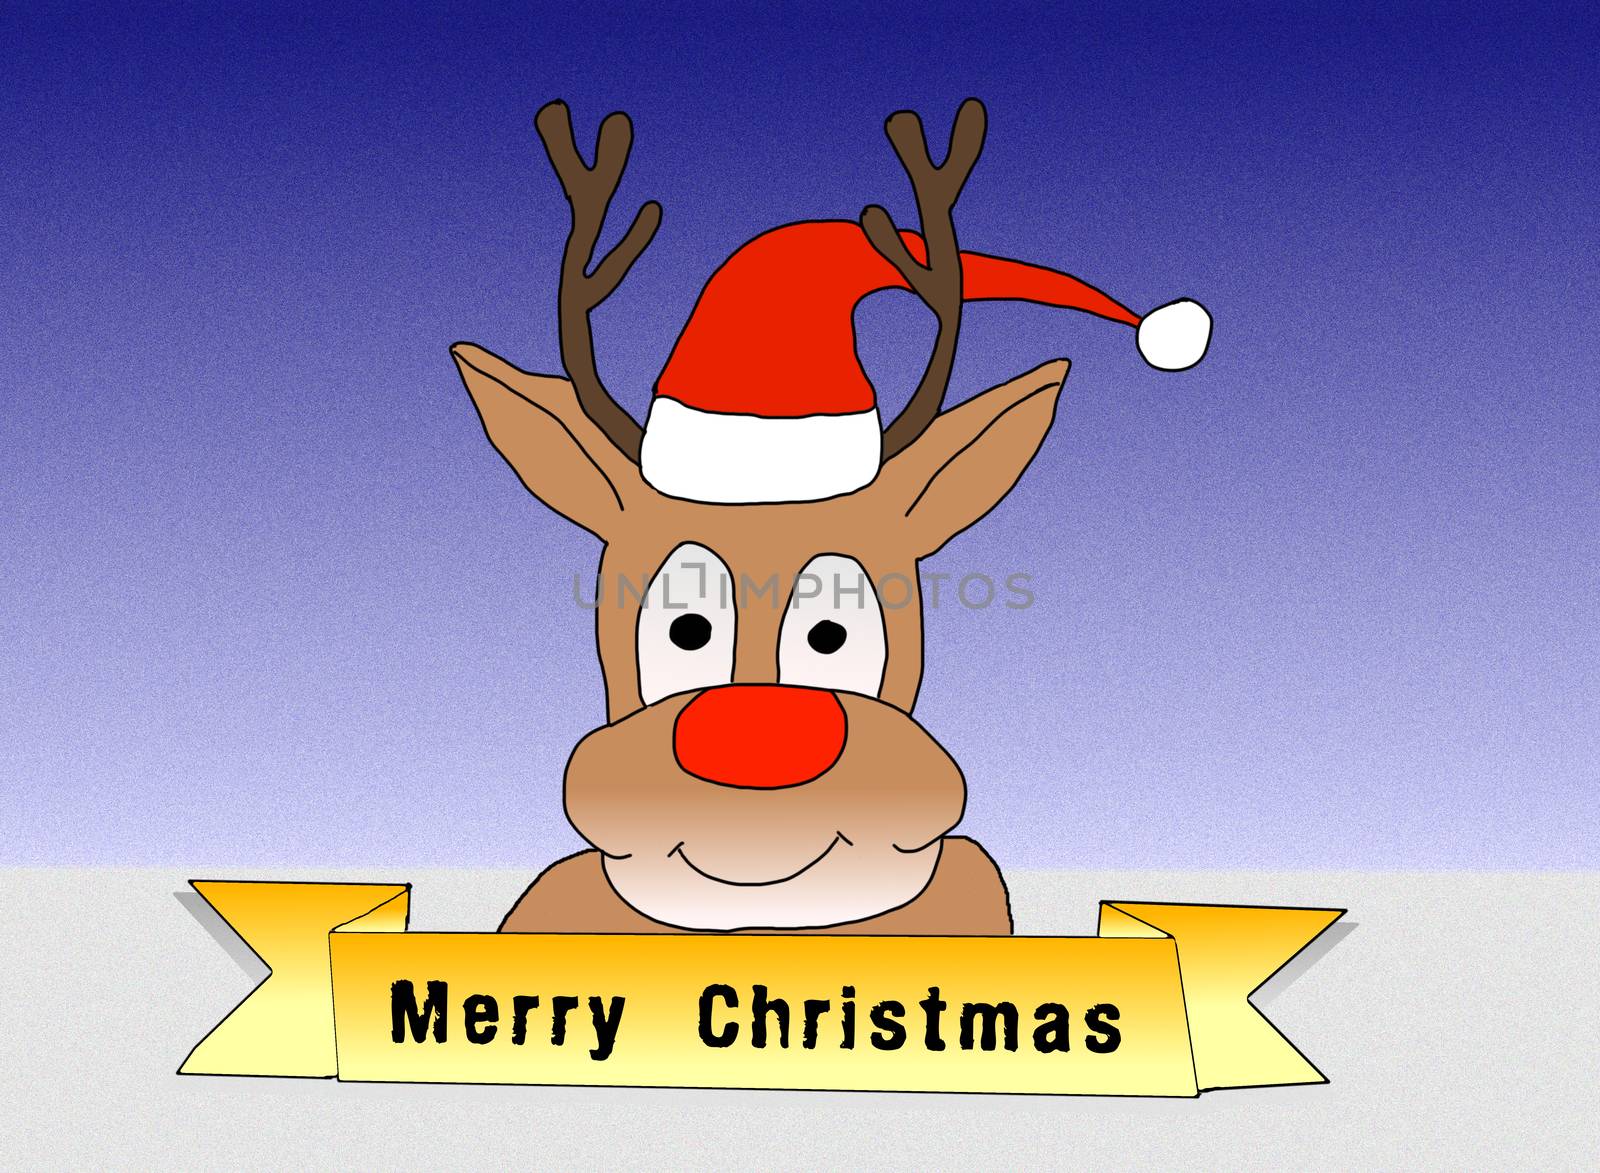 Illustration: Rudolph wishing Merry Christmas